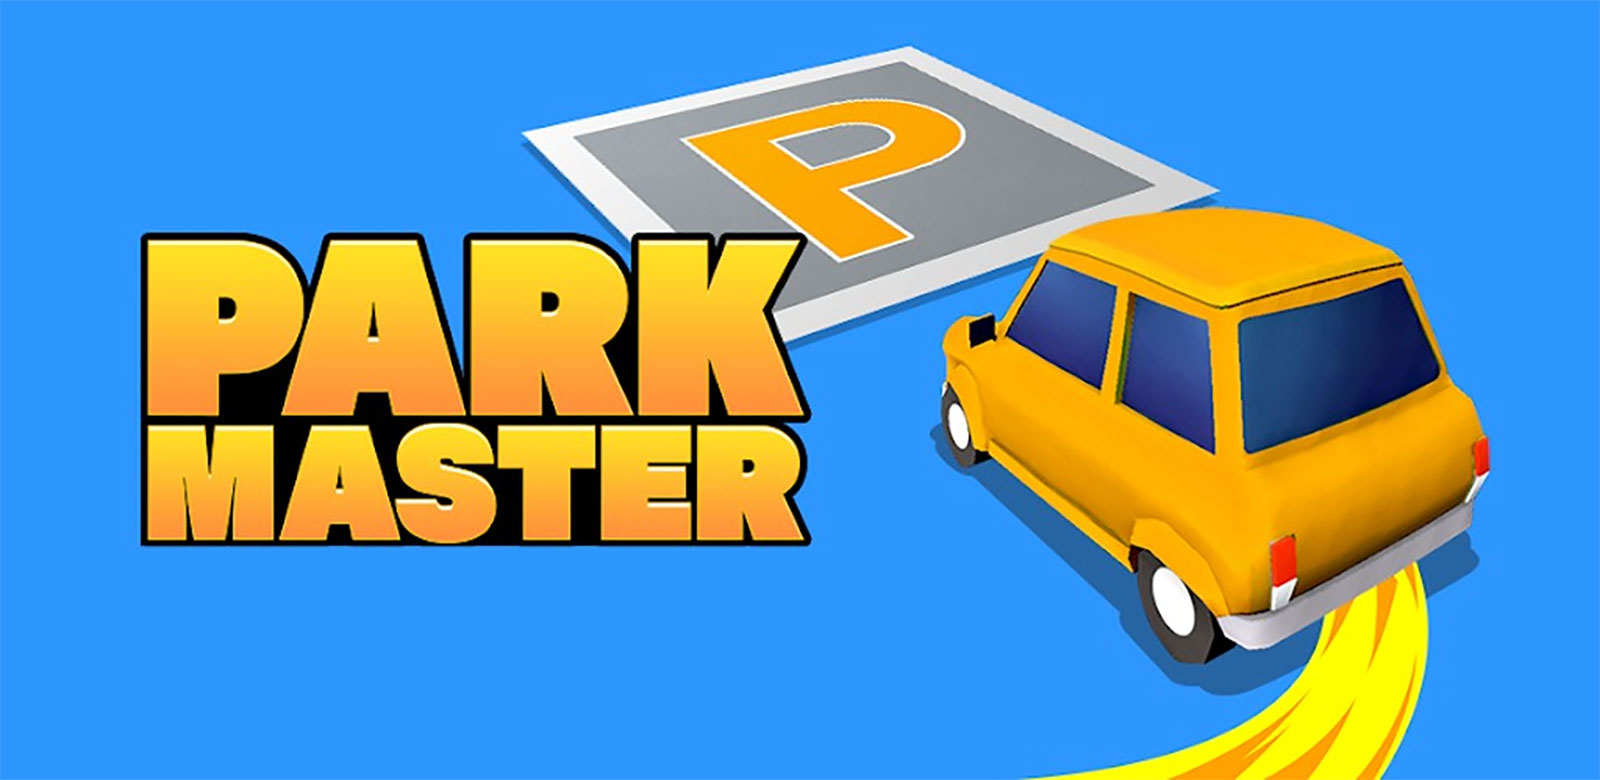 Park Master Mod Apk